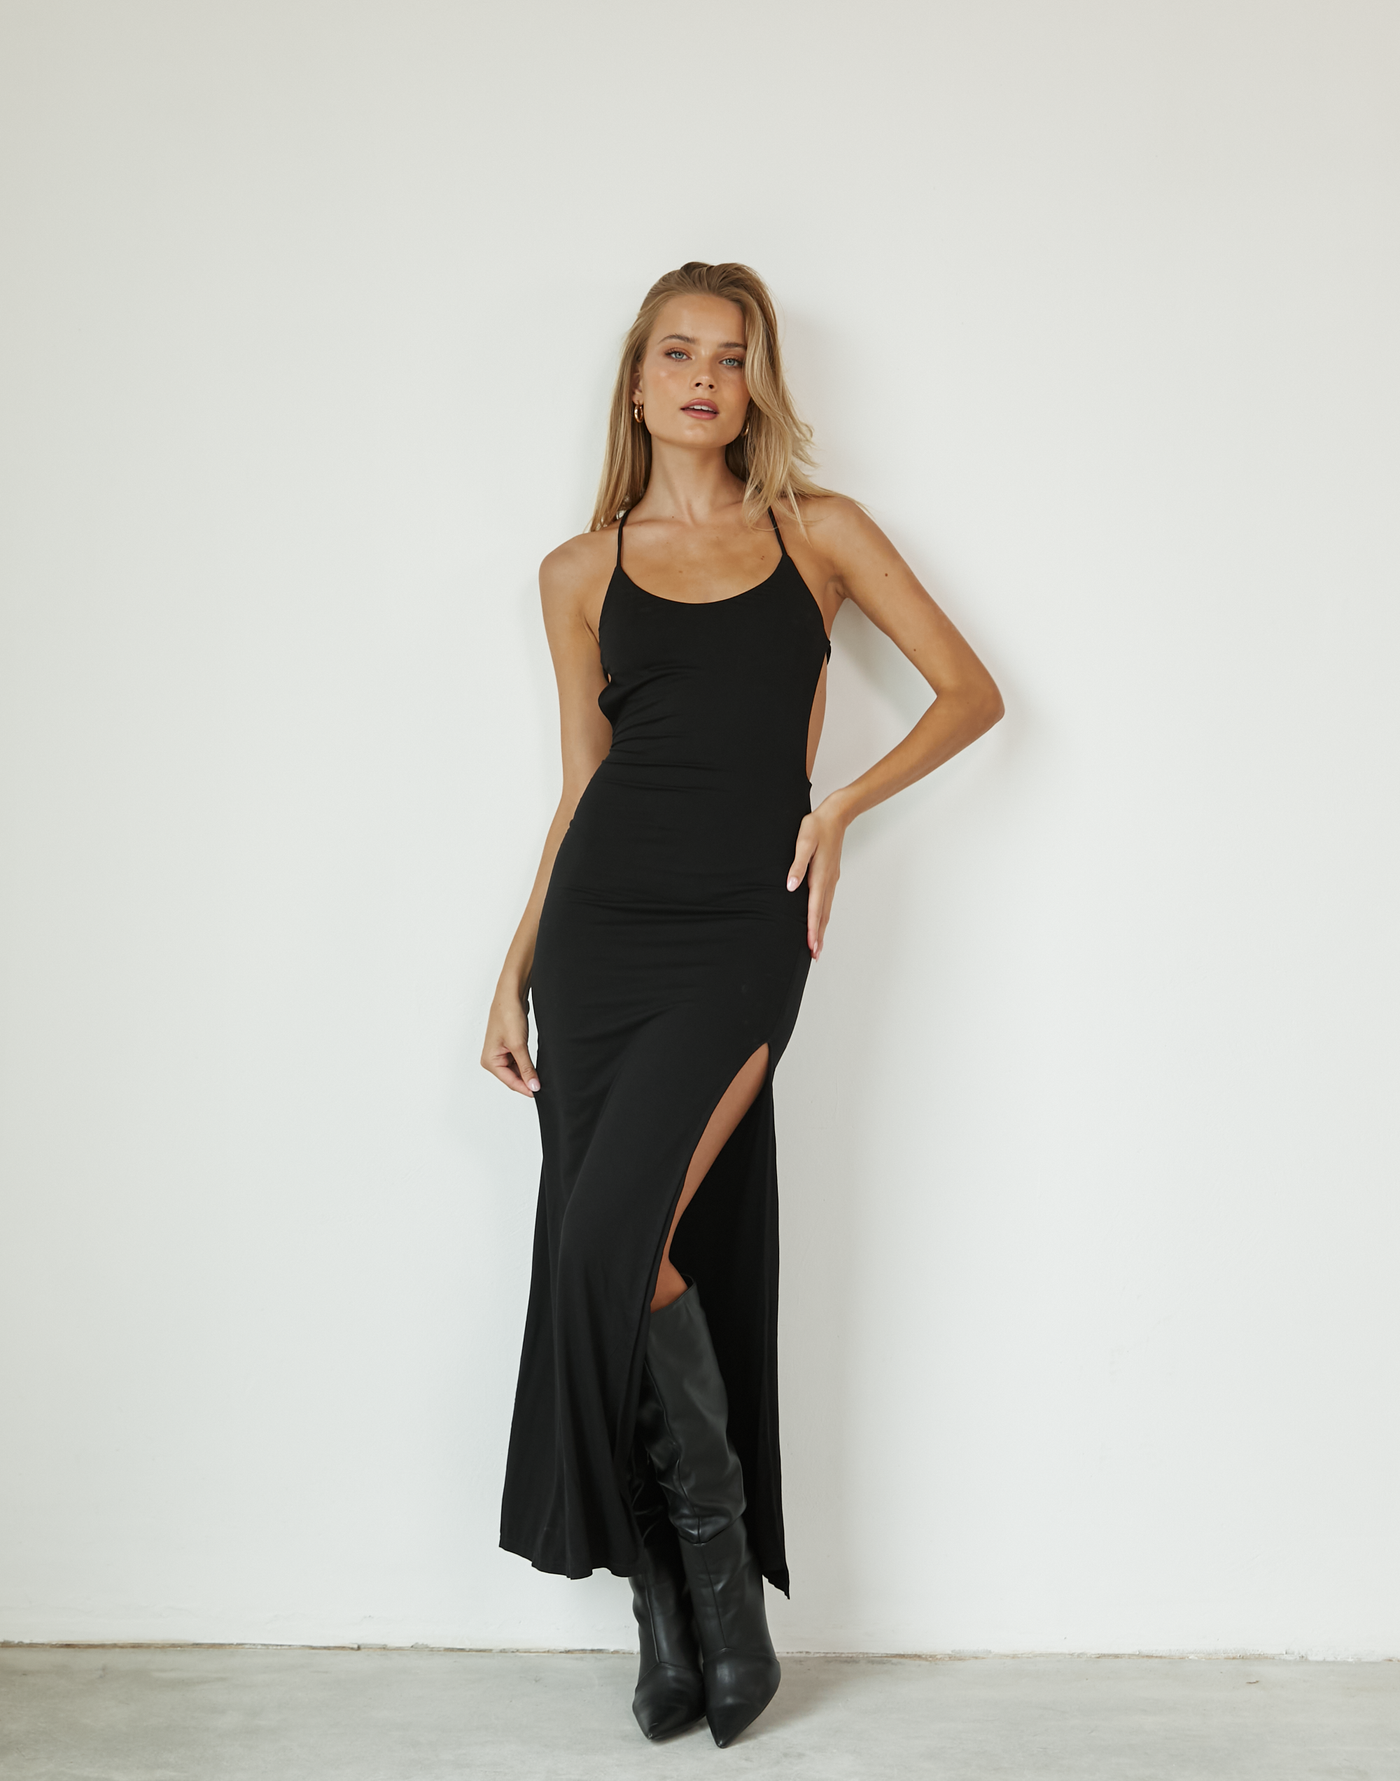 Ruth Maxi Dress (Black) - Tie-up Back Maxi Dress - Women's Dress - Charcoal Clothing